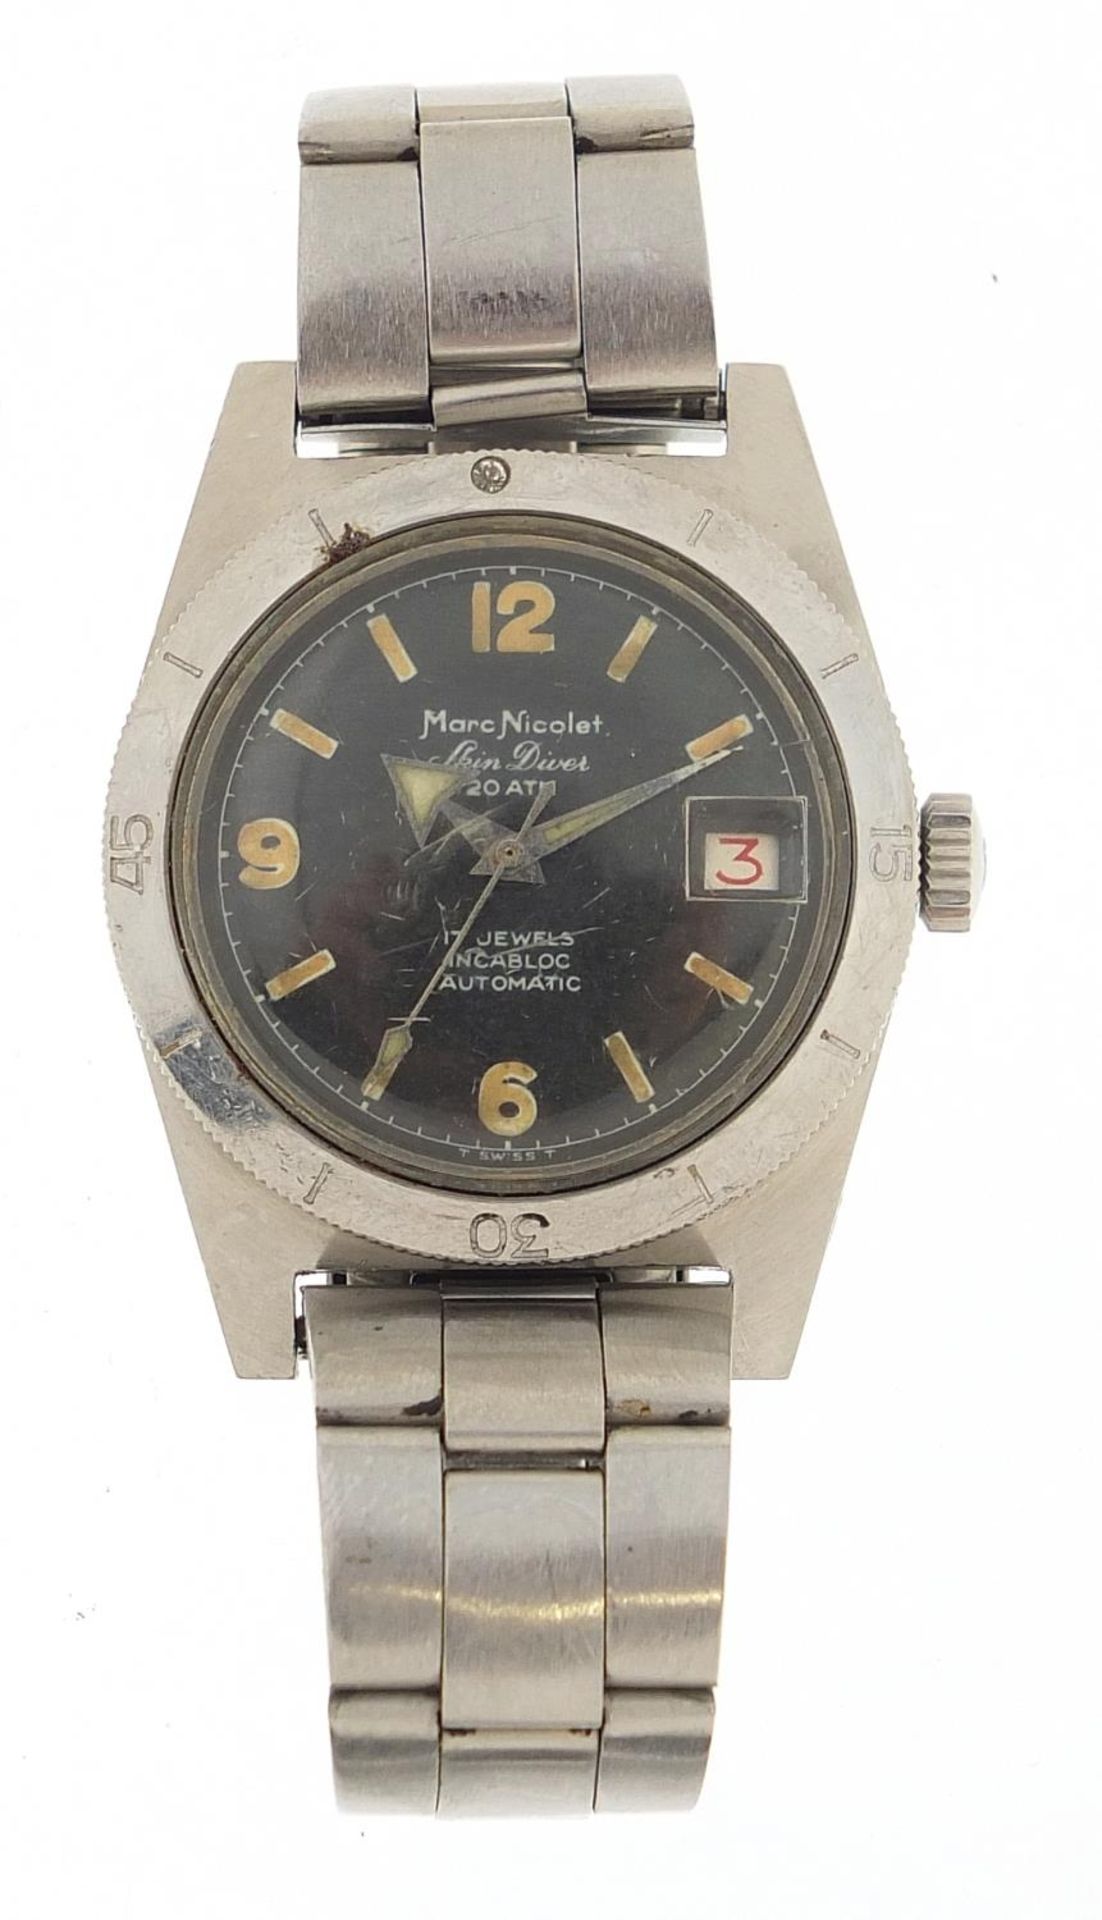 Marc Nicolet, gentlemen's Skin Diver automatic wristwatch with date aperture, 35mm in diameter - Image 2 of 5